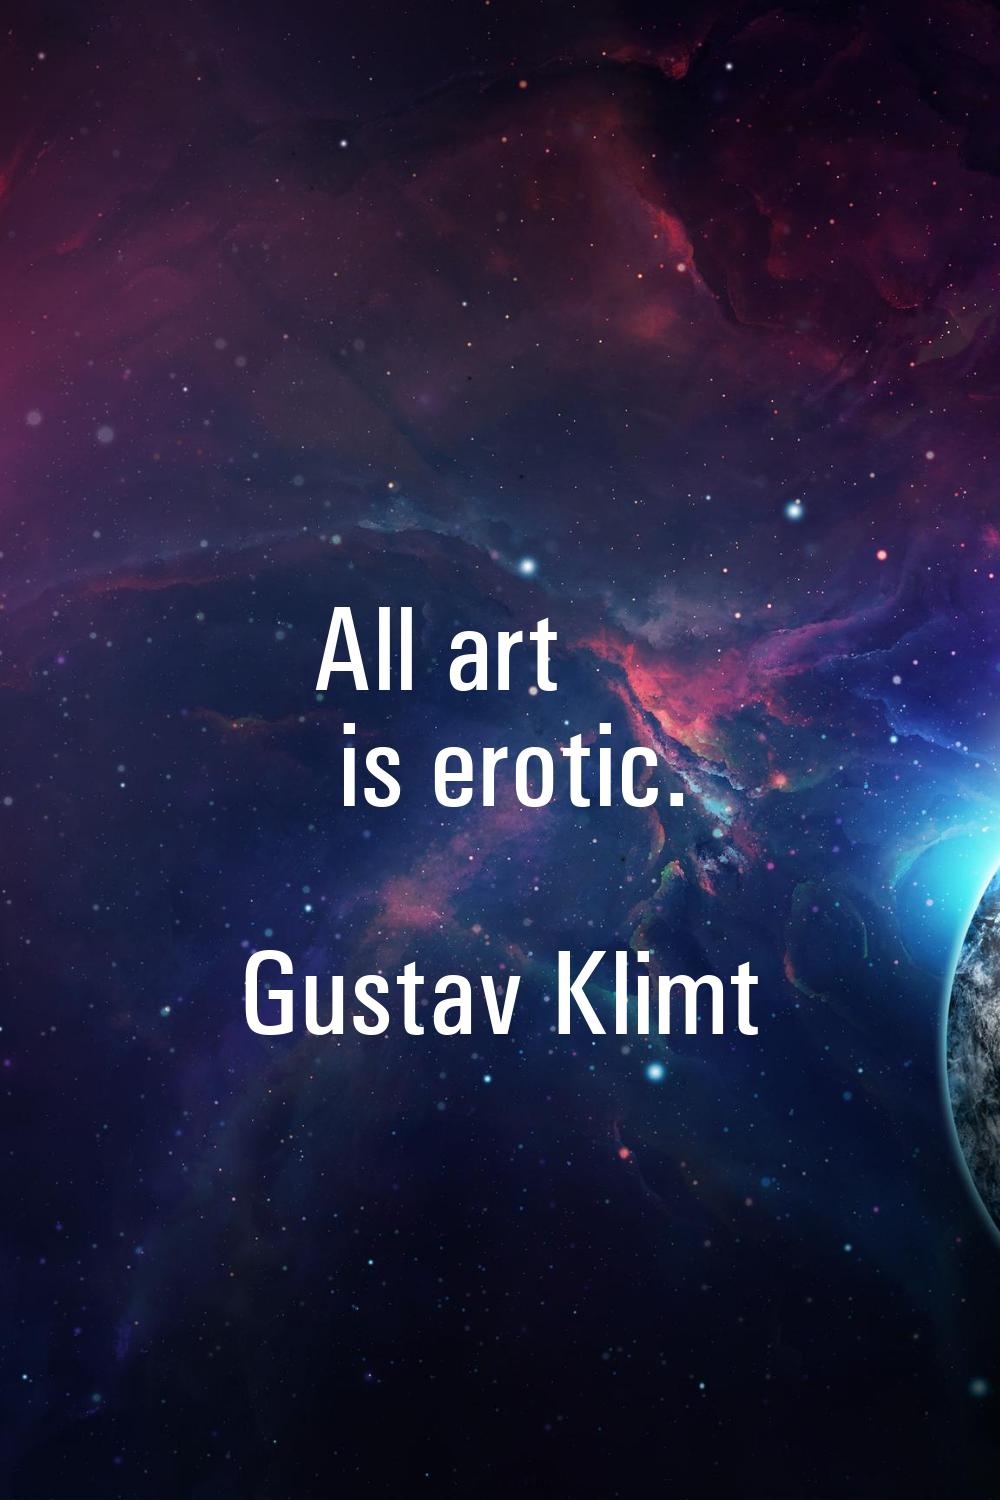 All art is erotic.